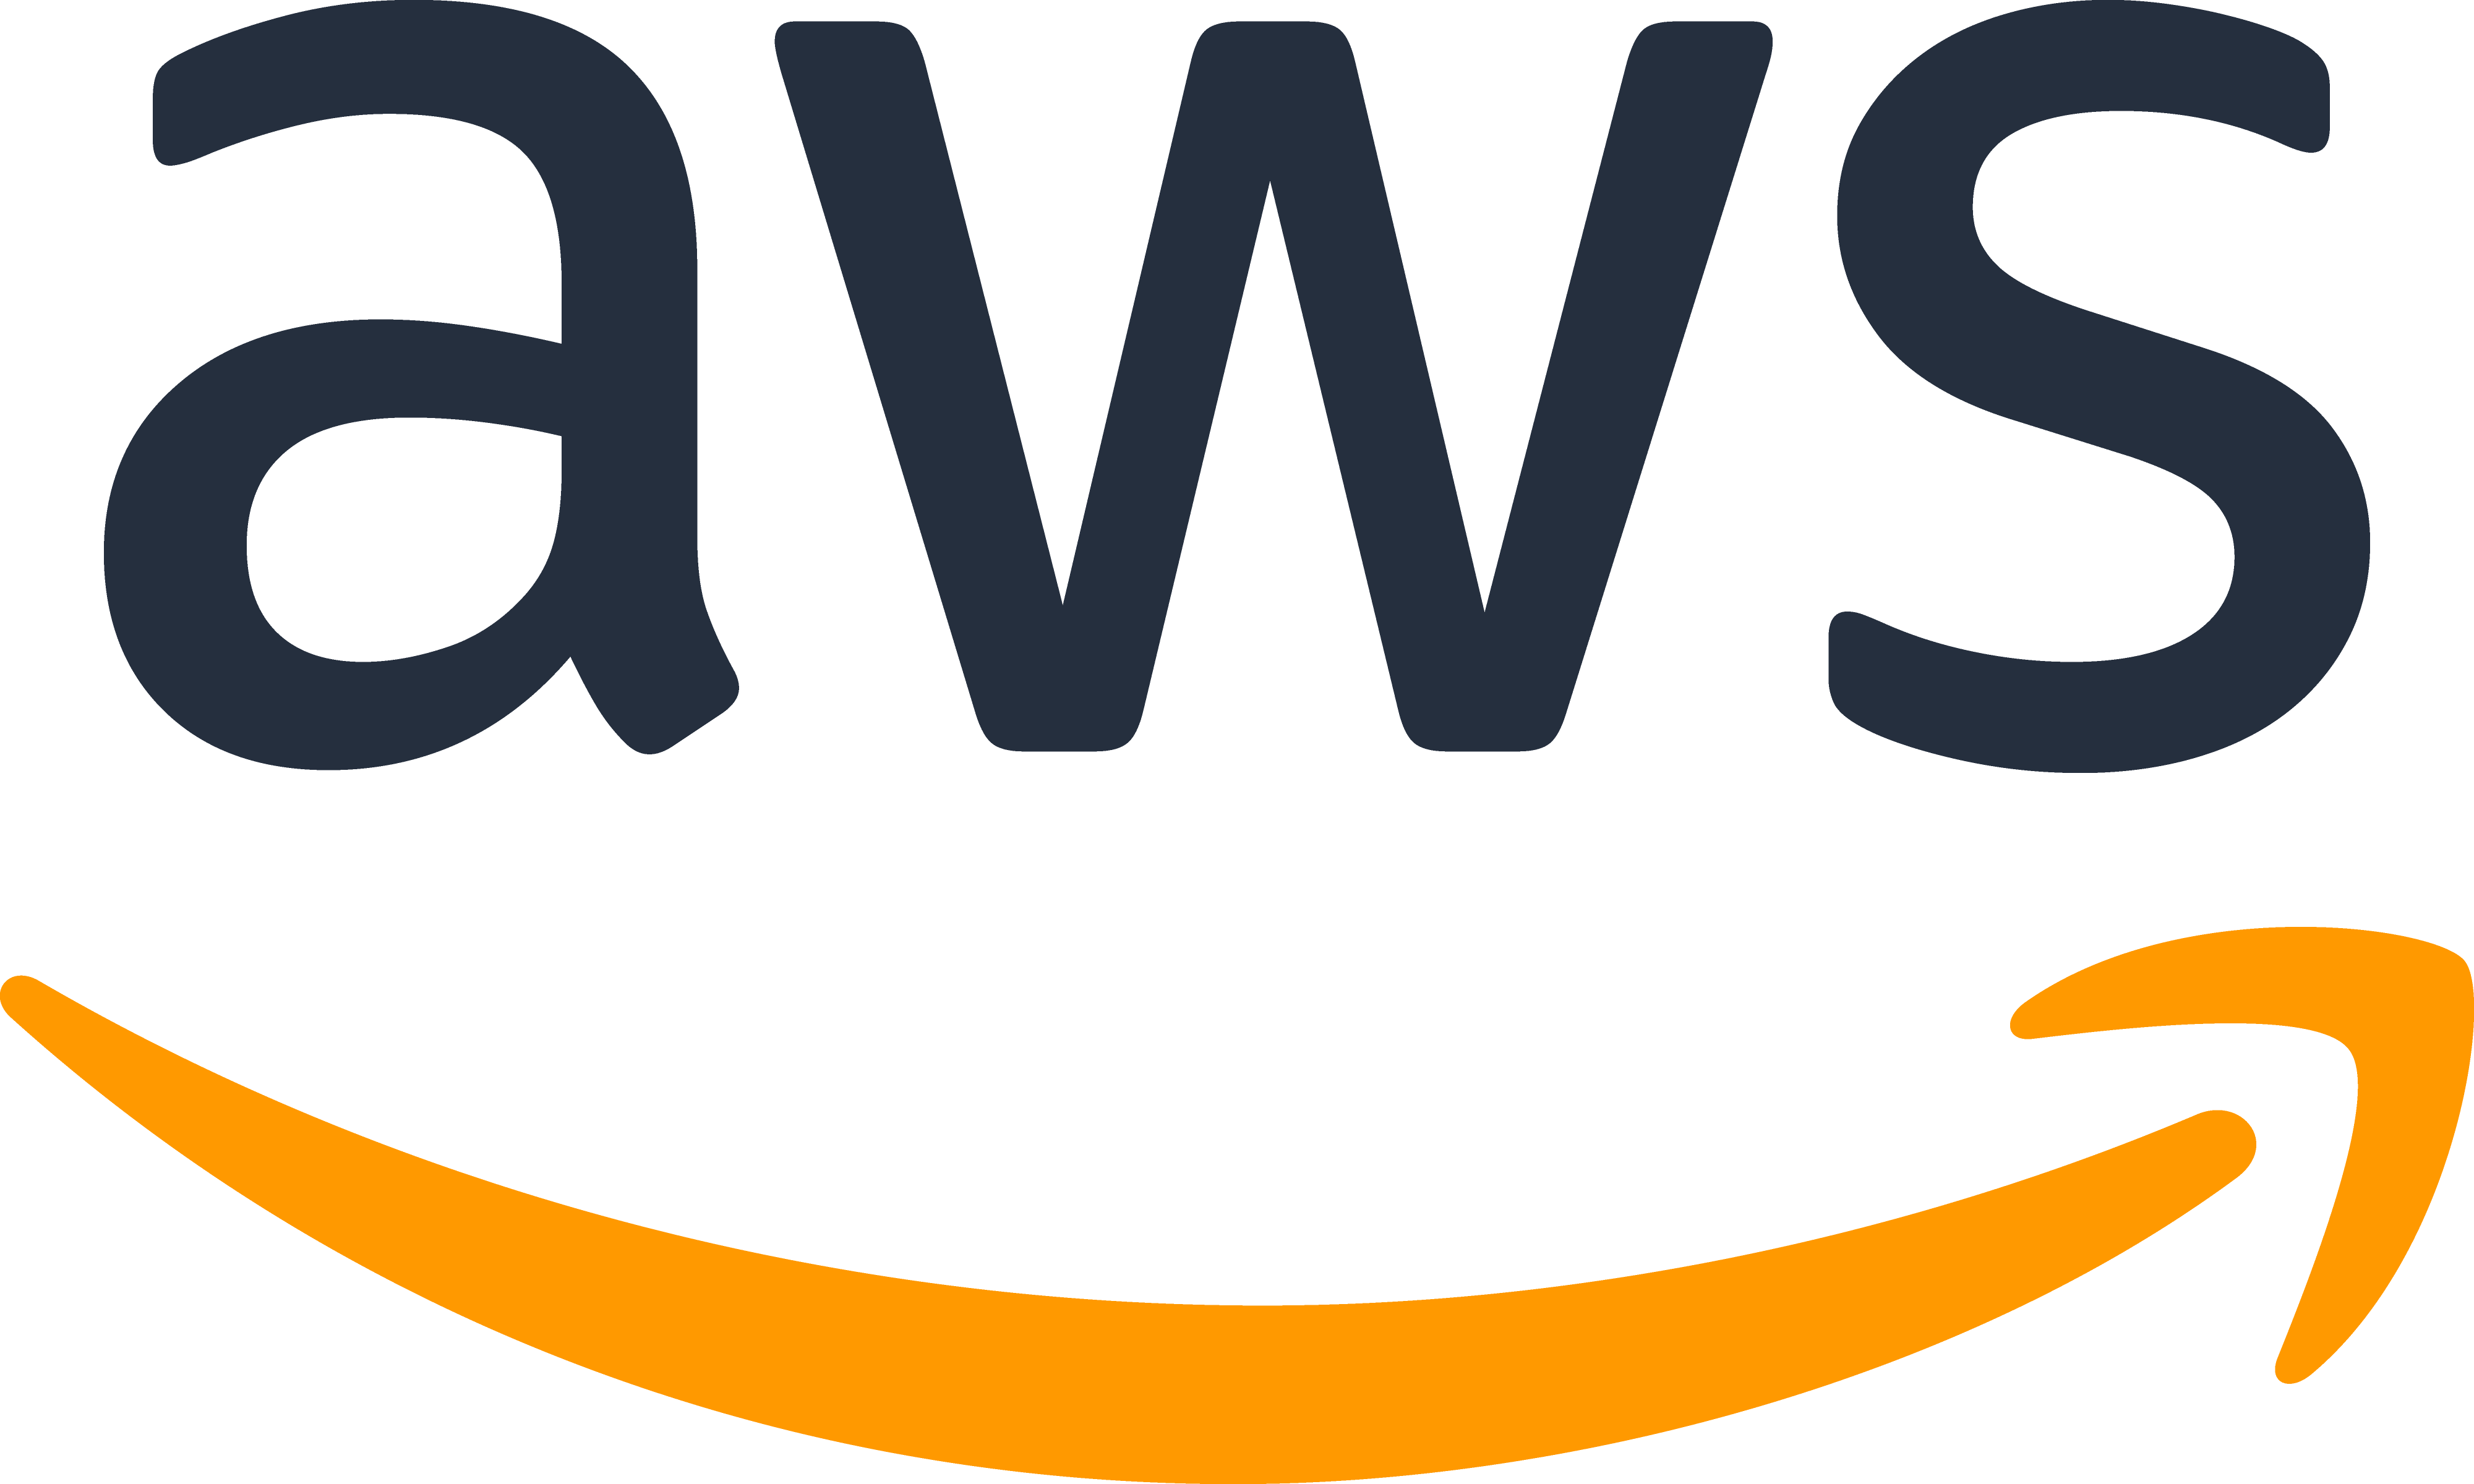 Amazon AWS Logo PNG Image in Transparent pngteam.com